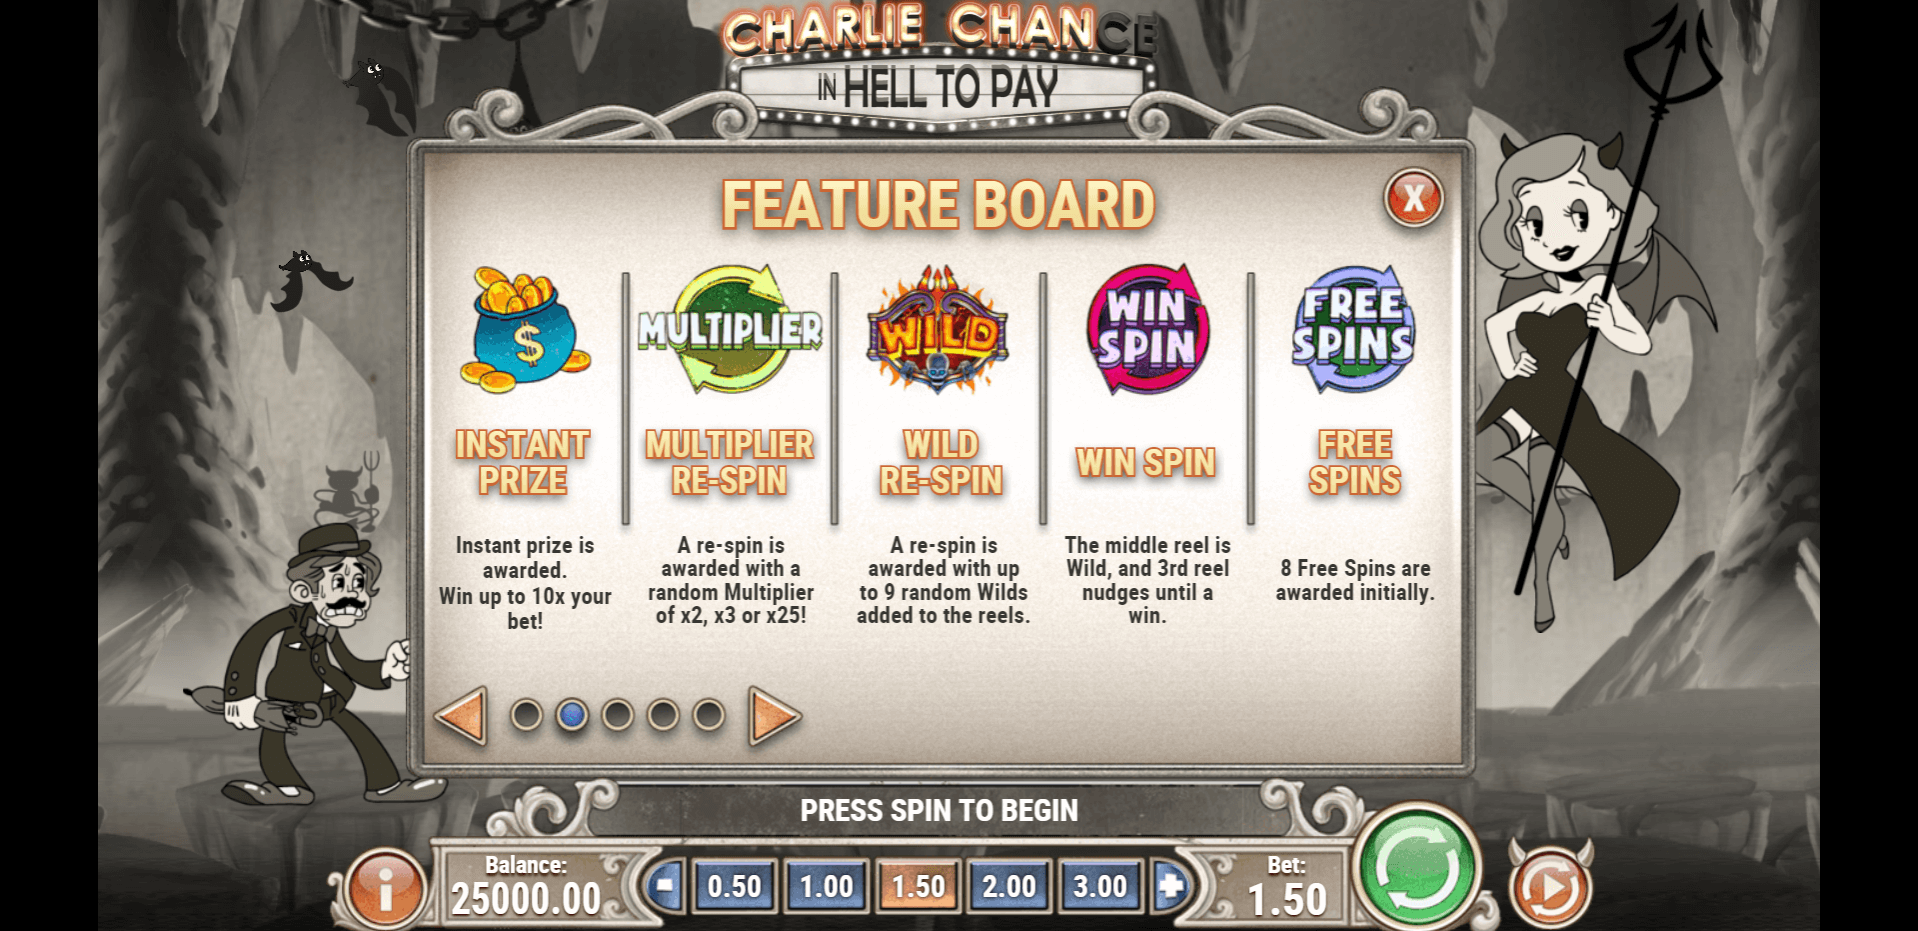 charlie chance slot machine detail image 4